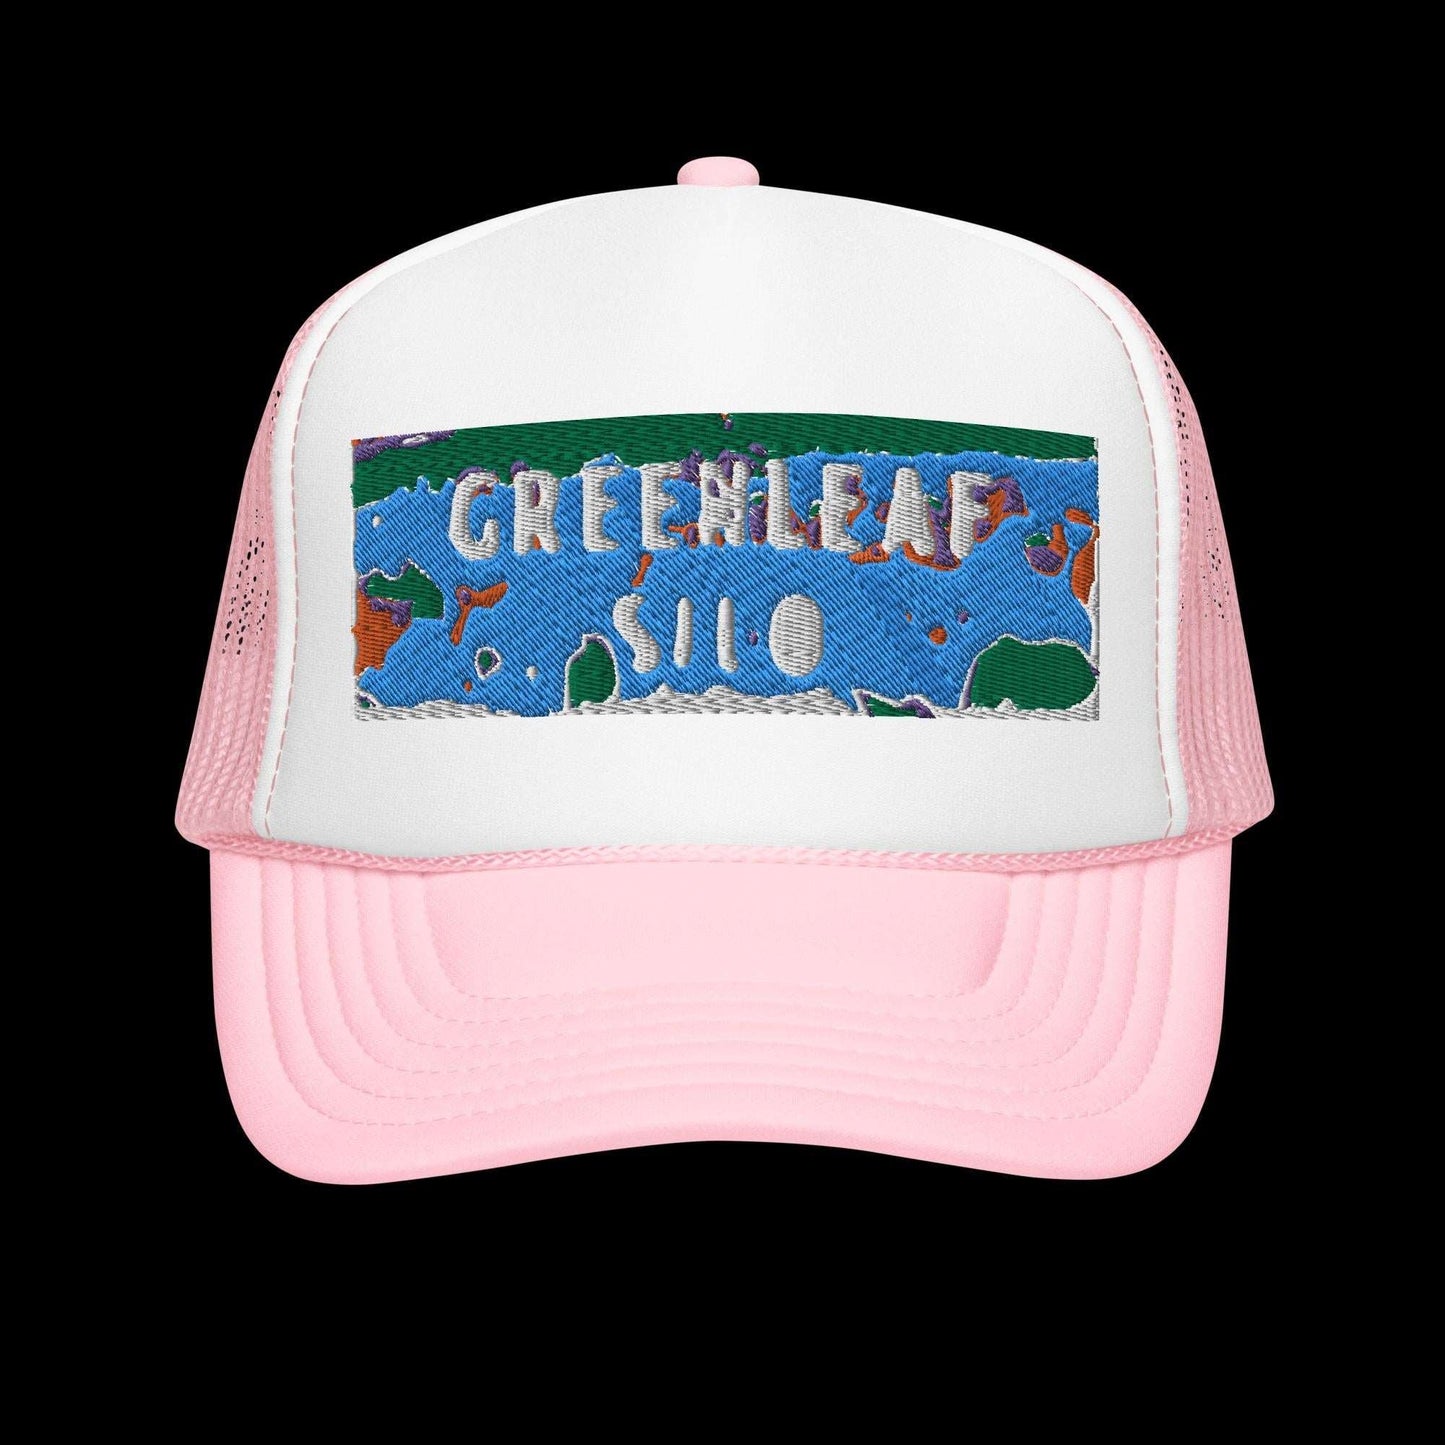 GreenLeaf Silo Foam trucker hat / GLS Cap - Lizard Vigilante